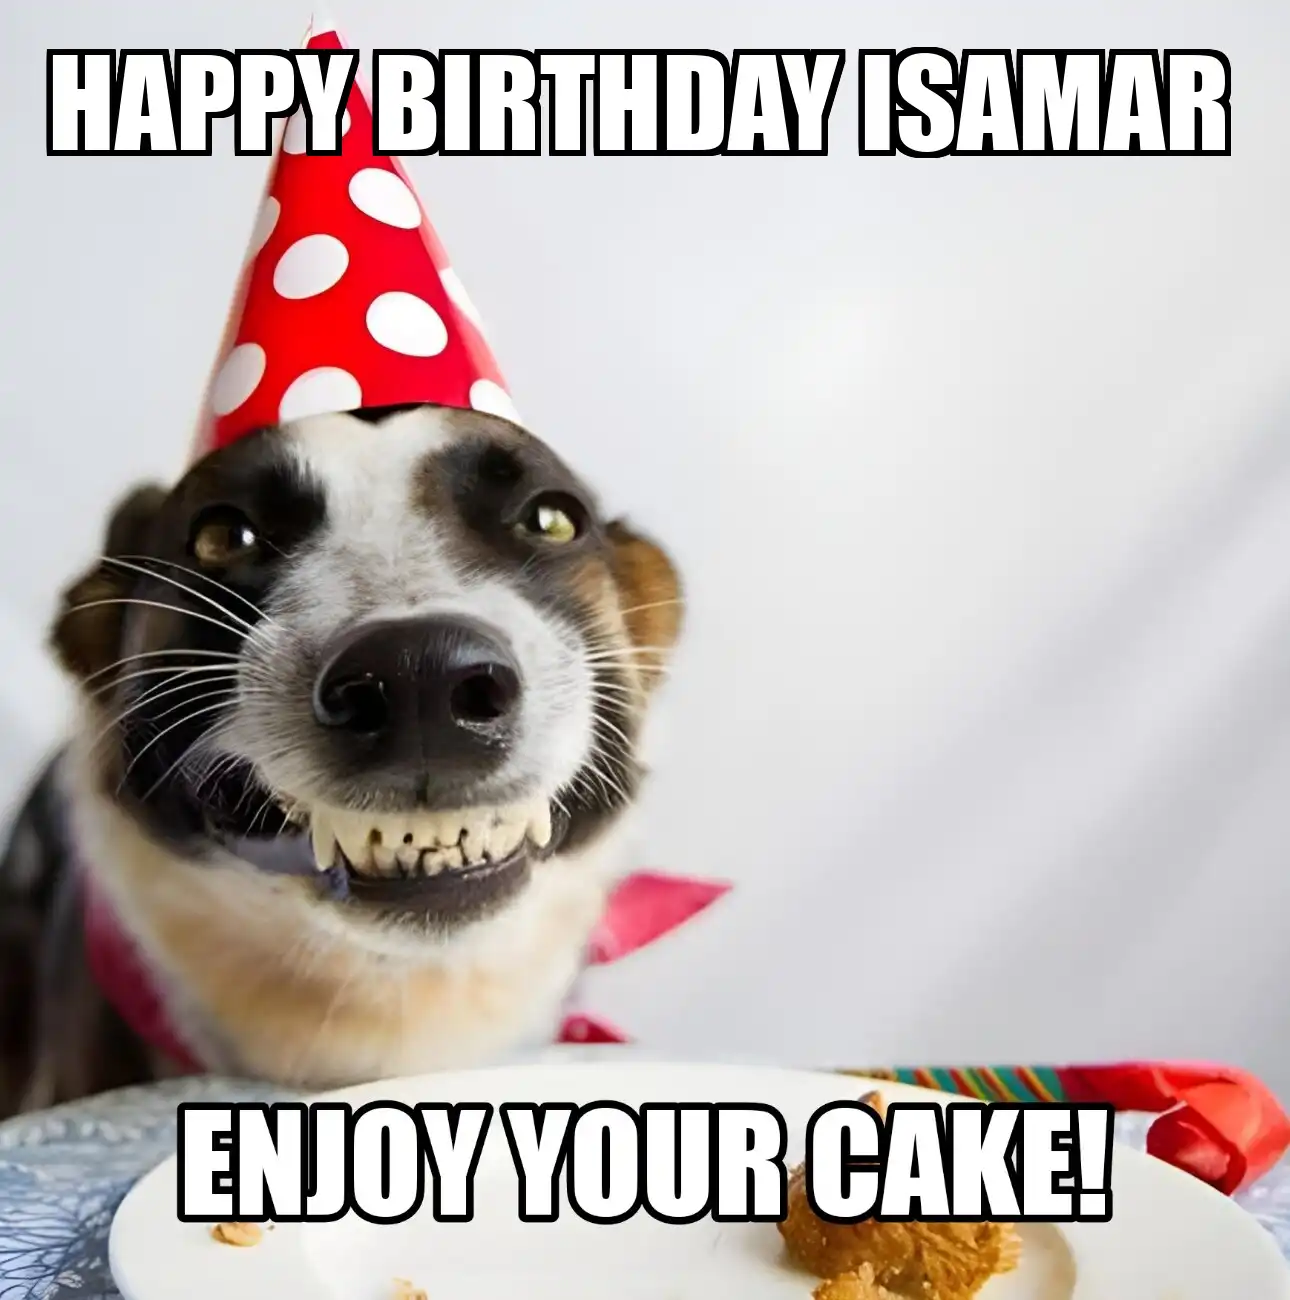 Happy Birthday Isamar Enjoy Your Cake Dog Meme